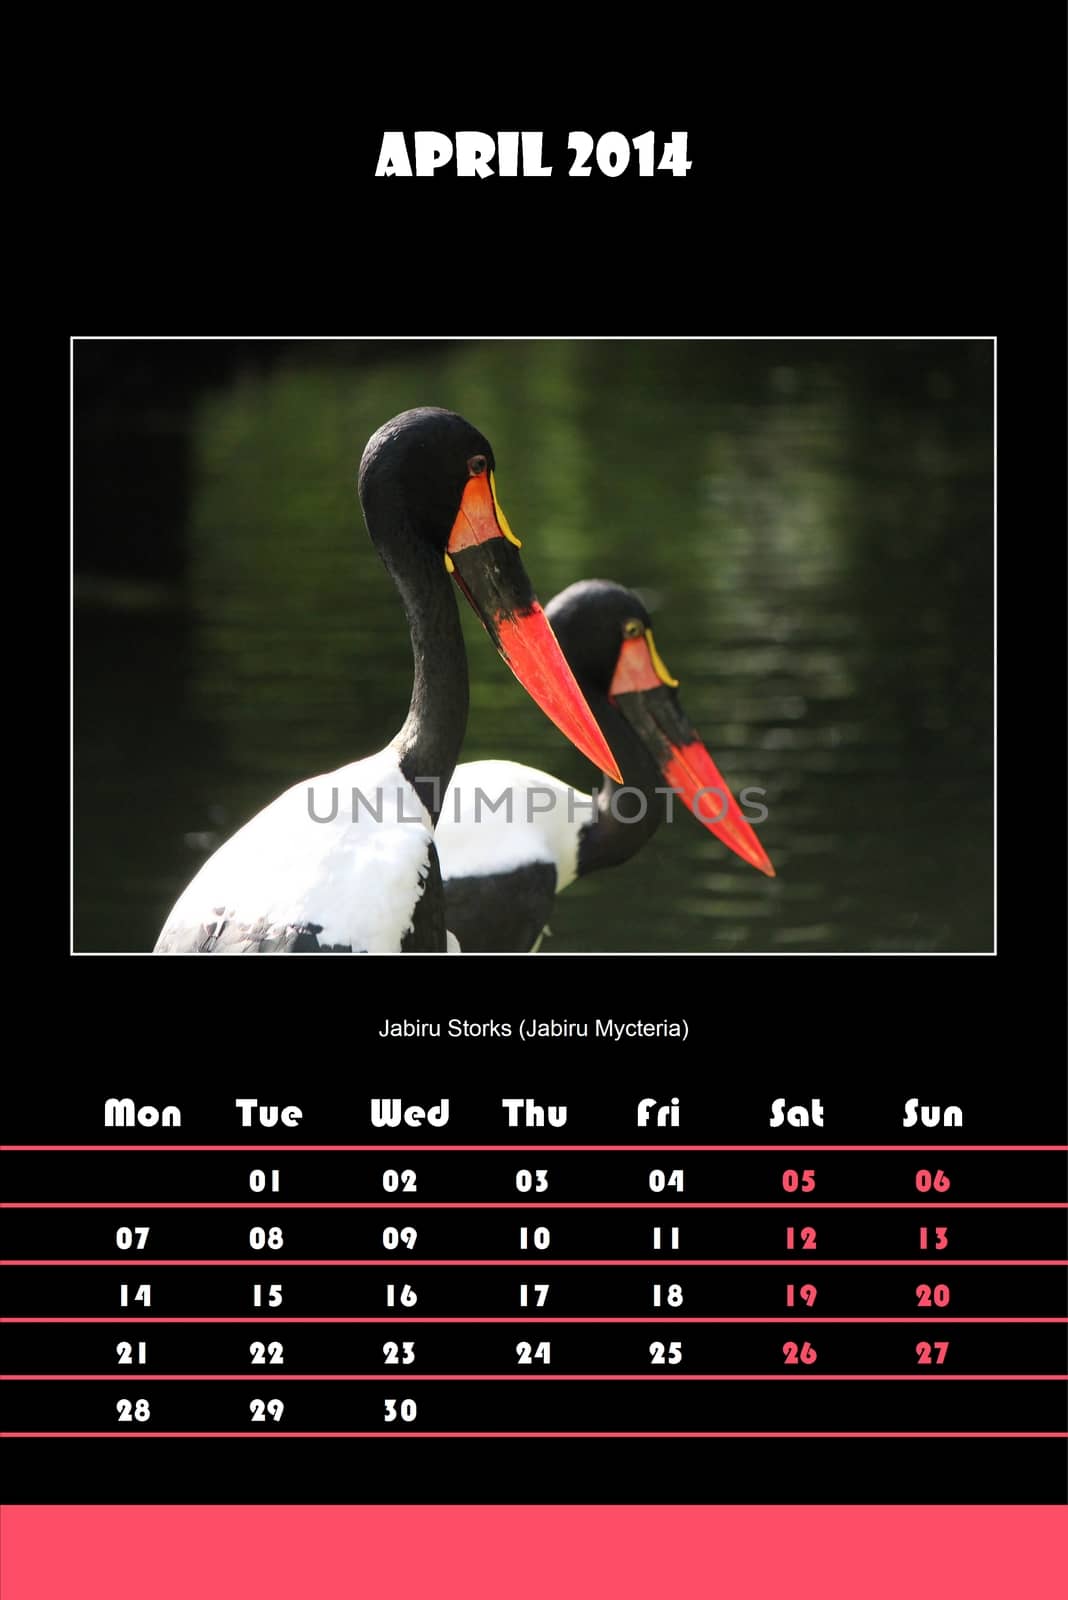 Colorful english calendar for april 2014 in black background, jabiru storks (jabiru micteria) picture